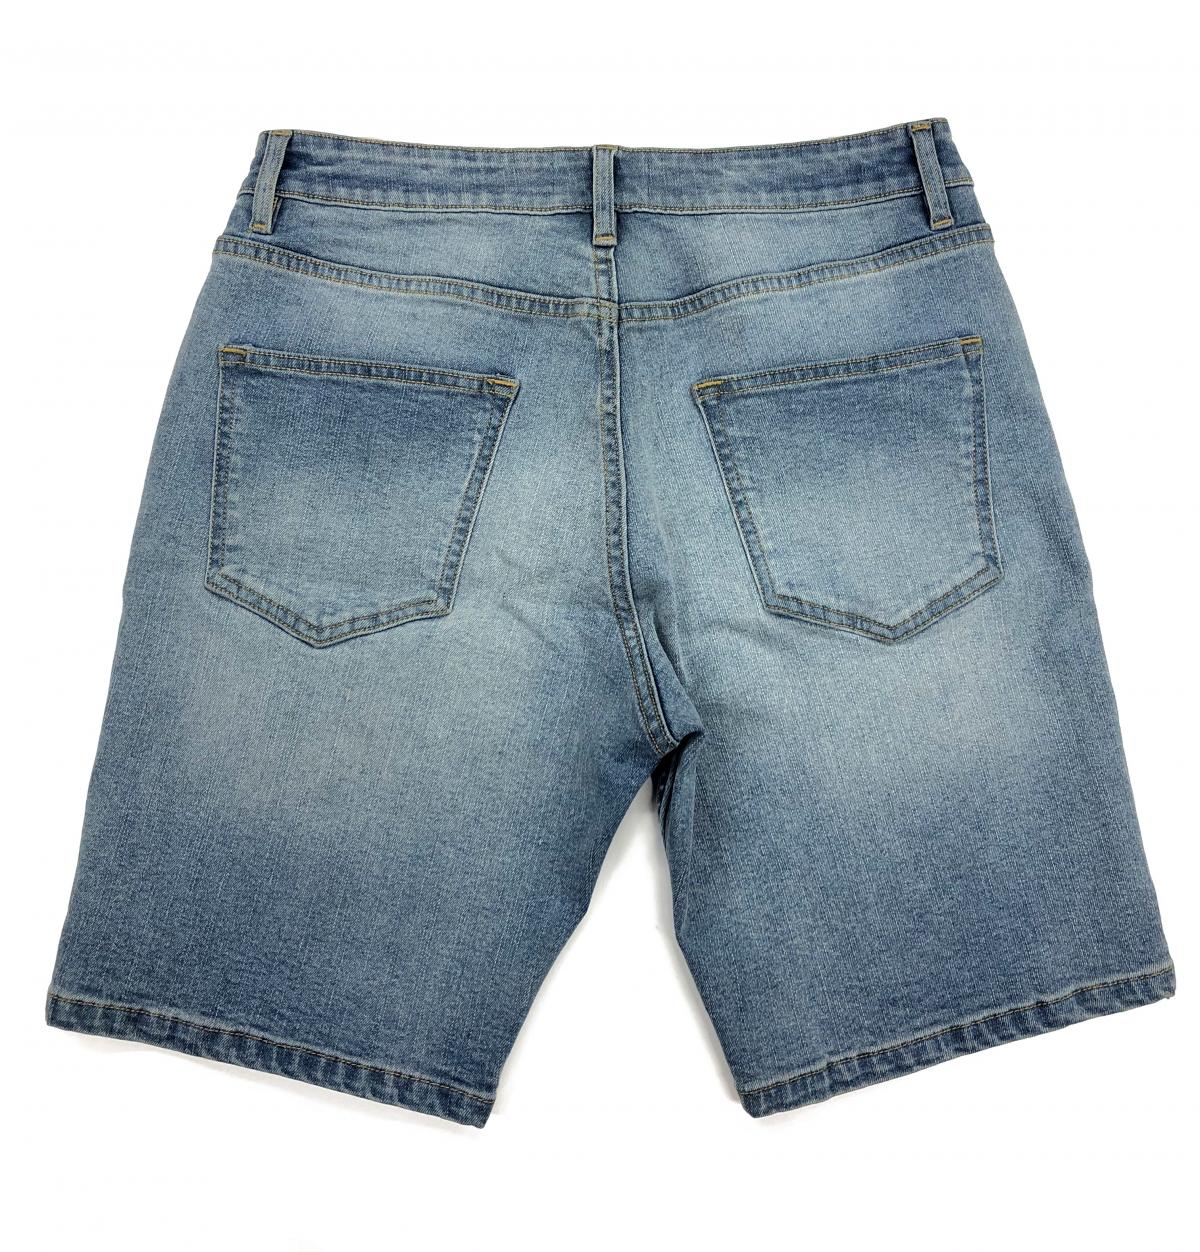 Men's Jeans Shorts SS0010 #1